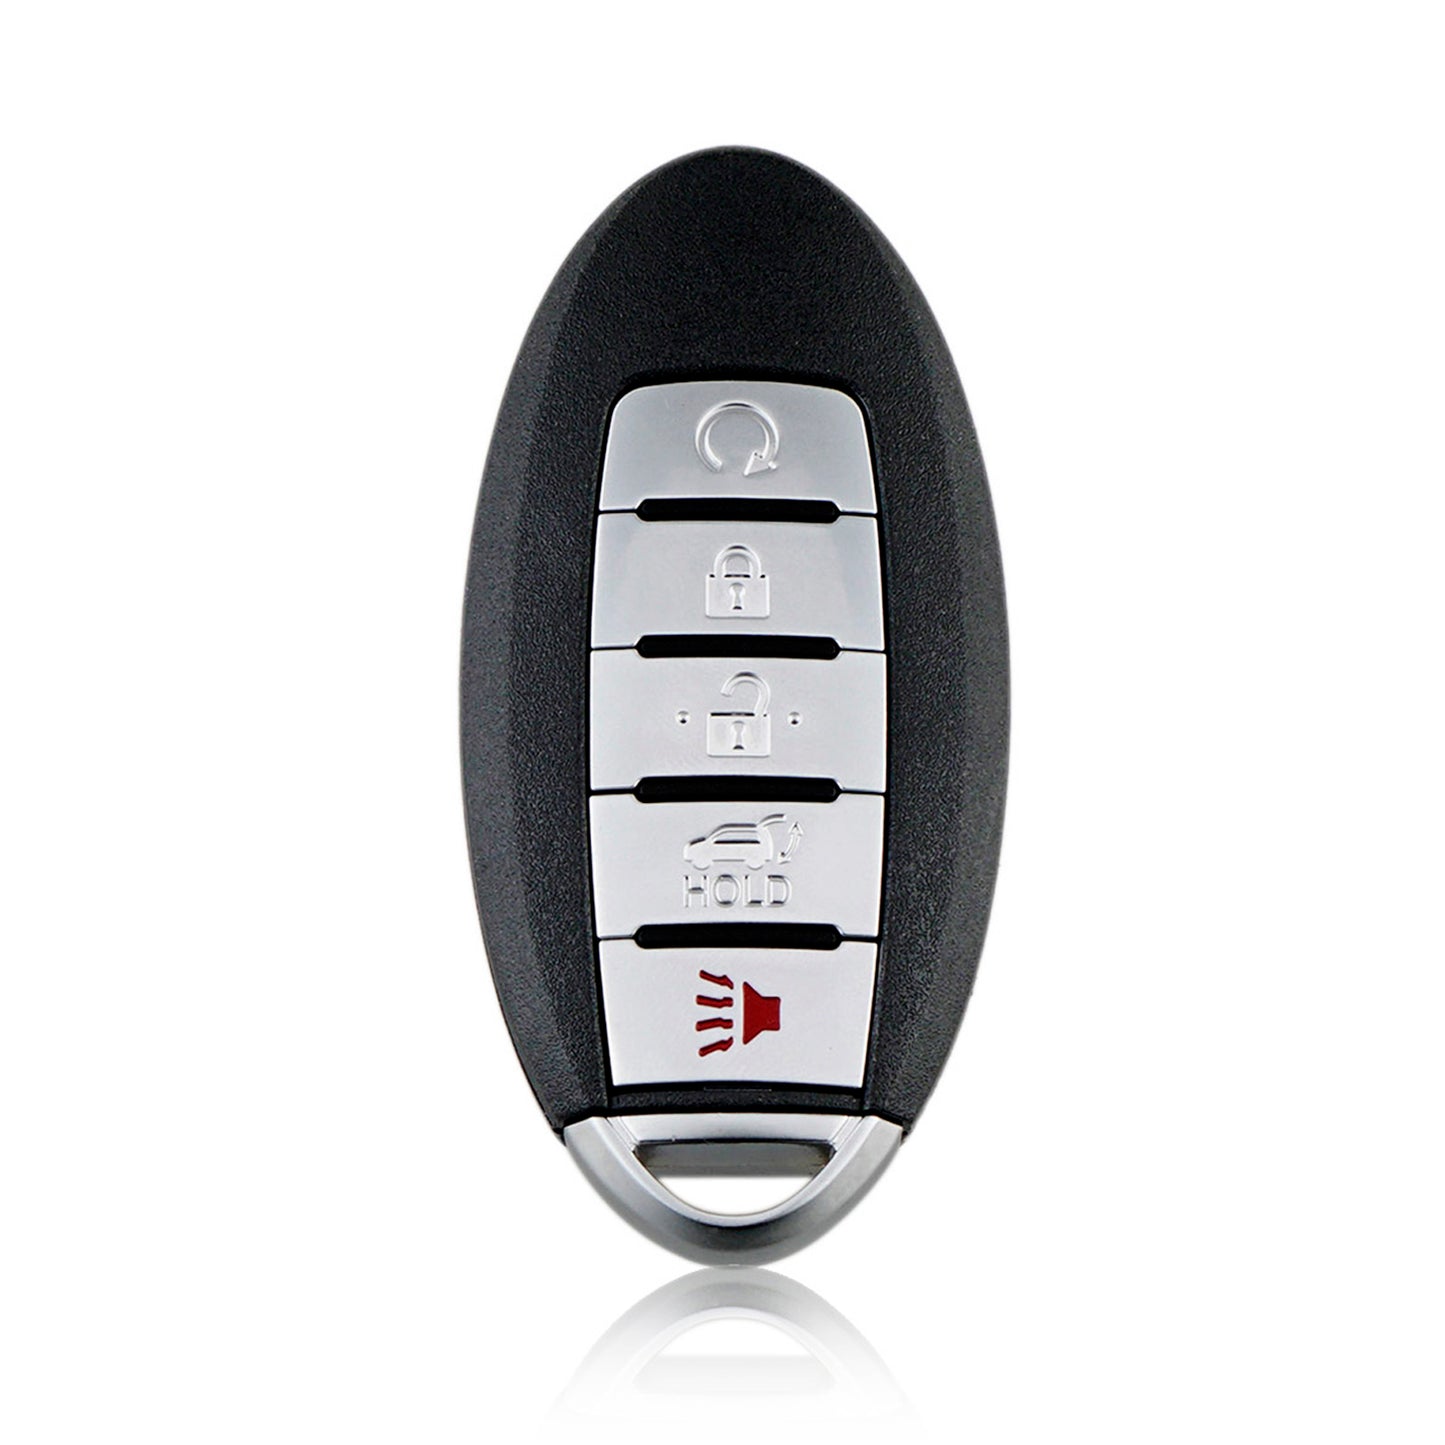 5 Buttons 434MHz Fob Entry Car Remote Key For 2019-2020 Nissan Murano Pathfinder Hybrid Infiniti QX60 FCC ID : KR5TXN7 SKU :H699